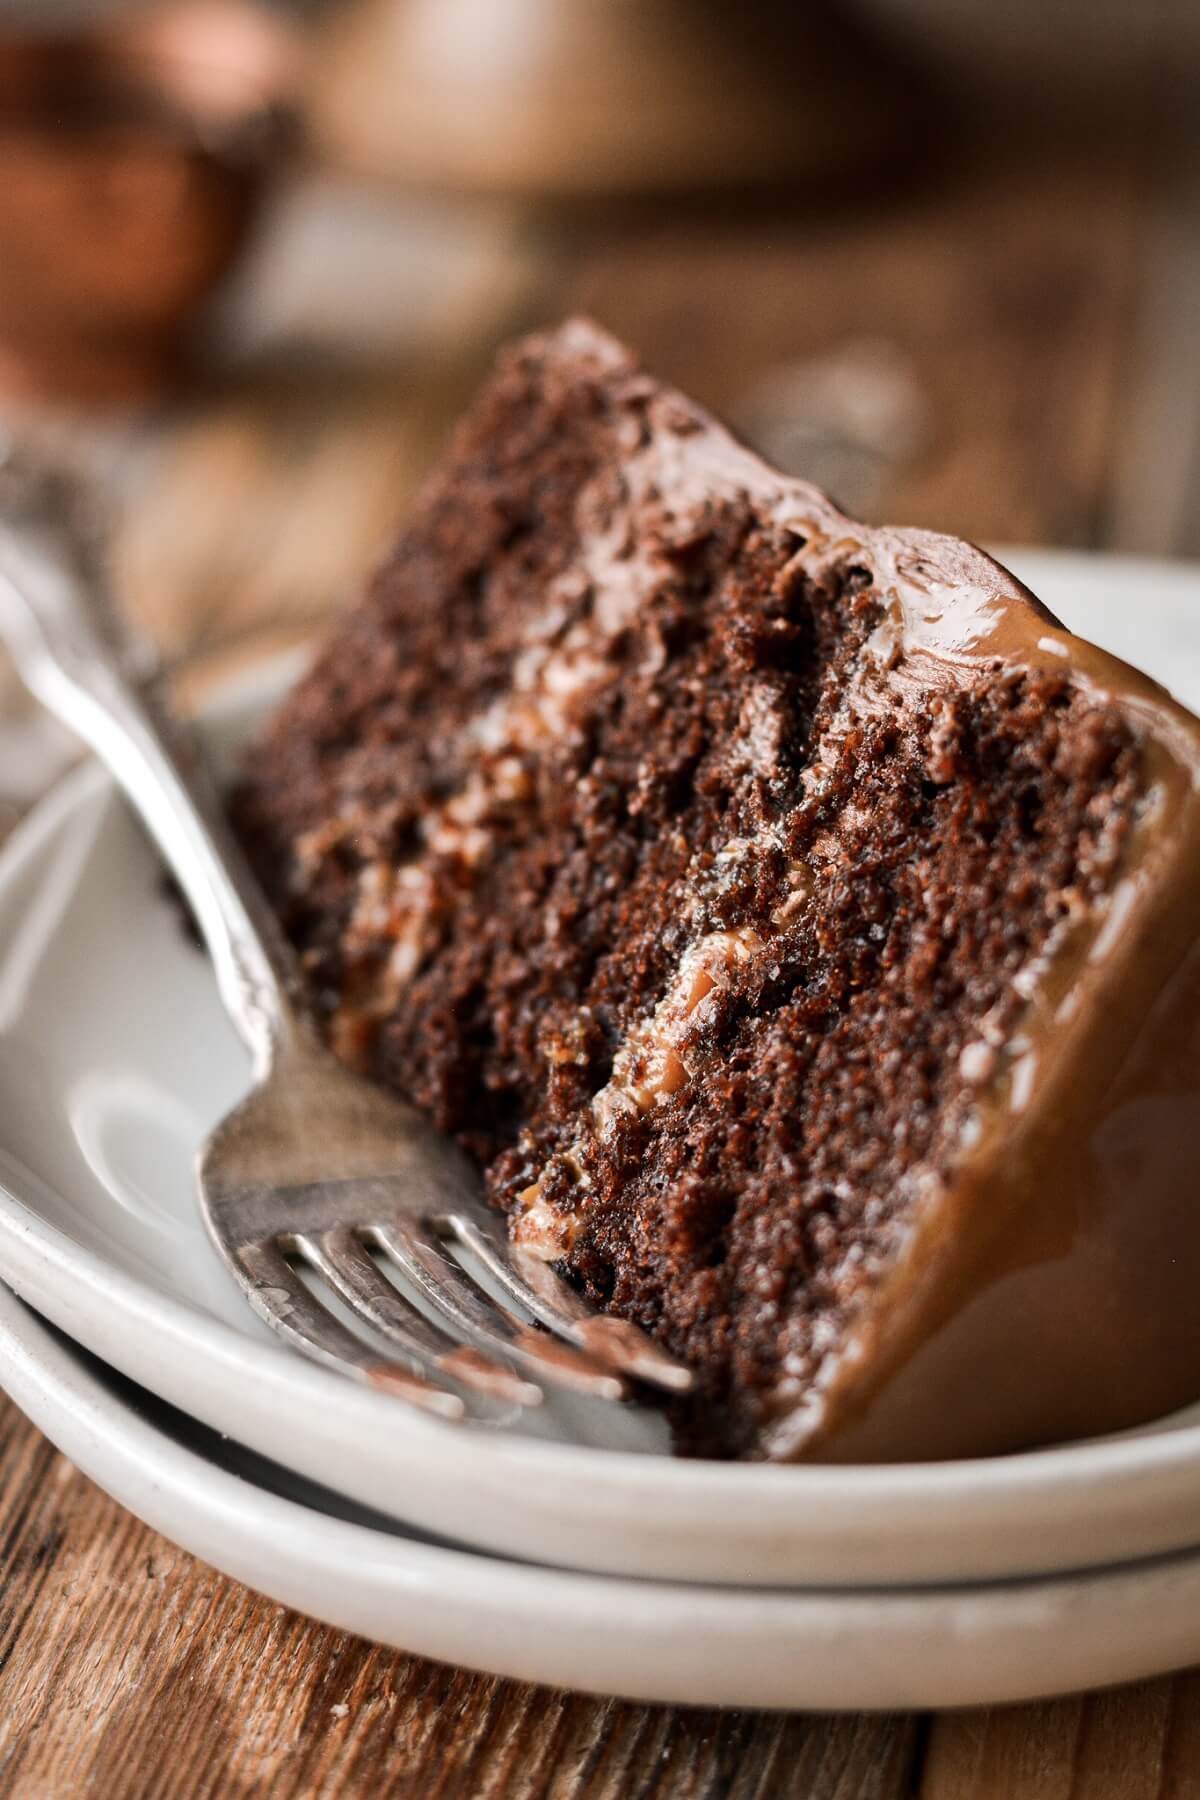 Slice of chocolate caramel toffee cake.